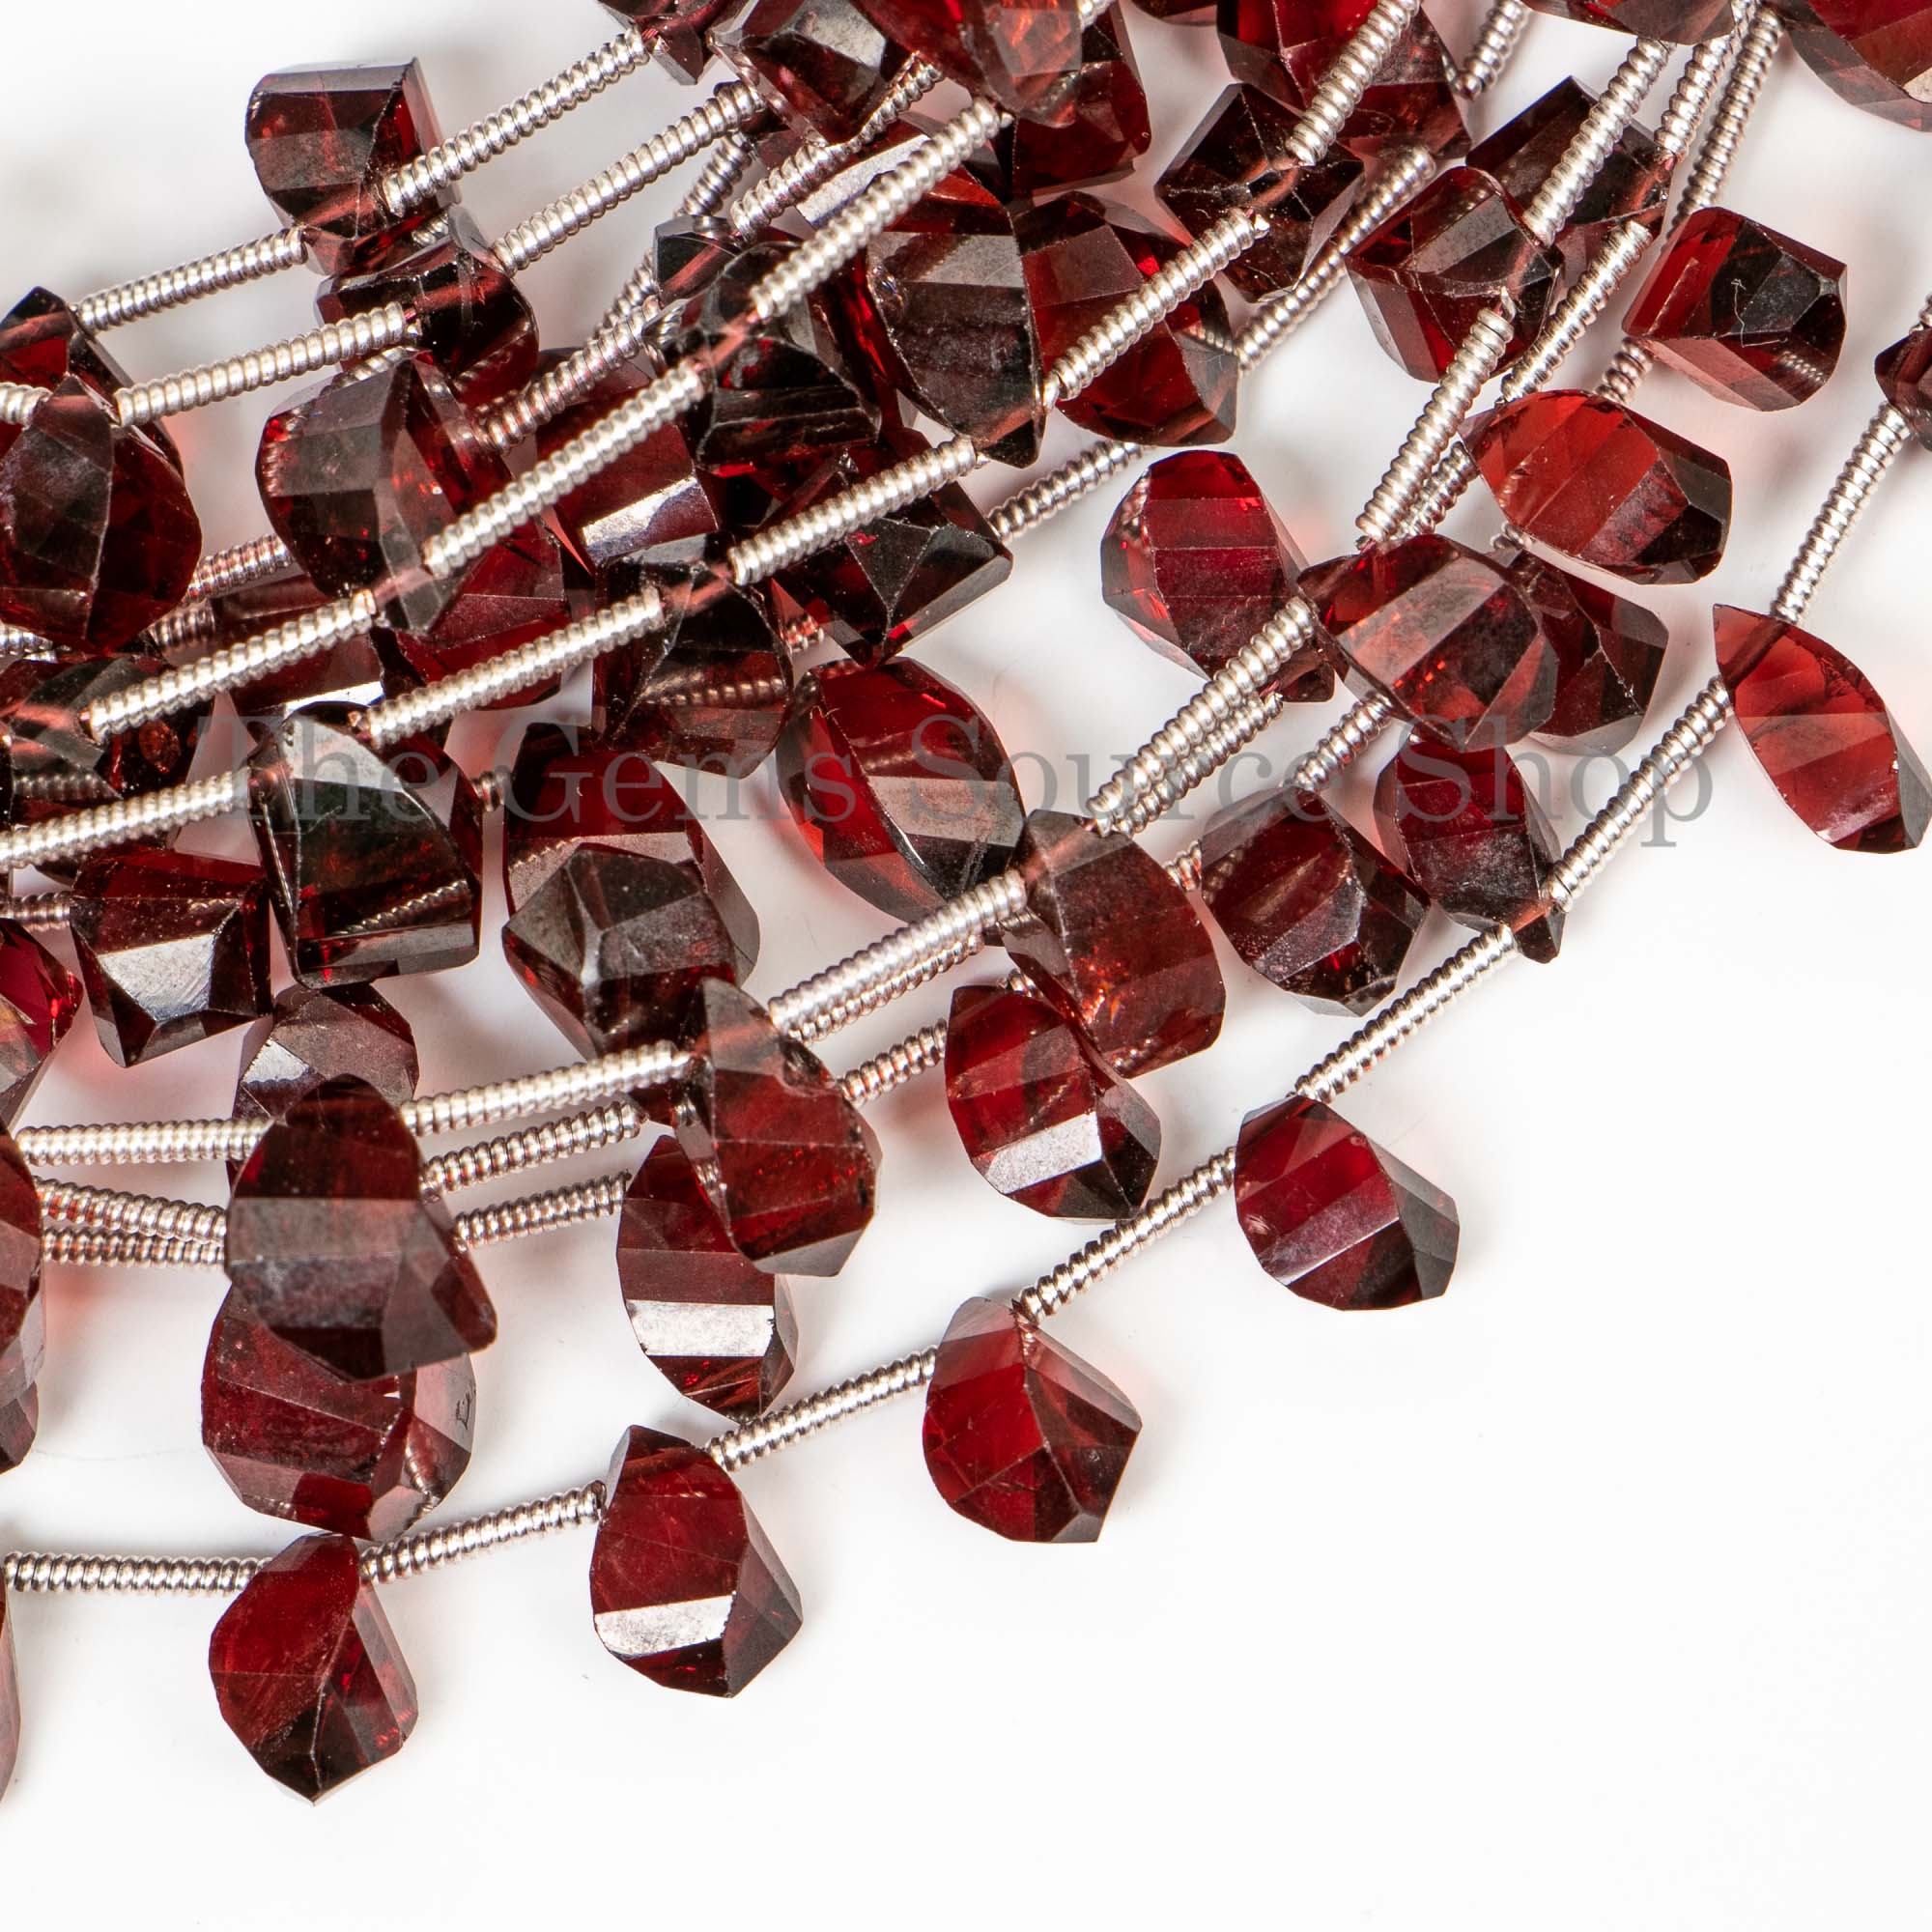 Mozambique Garnet Faceted Twisted Drops Beads, Garnet Fancy Drop Beads